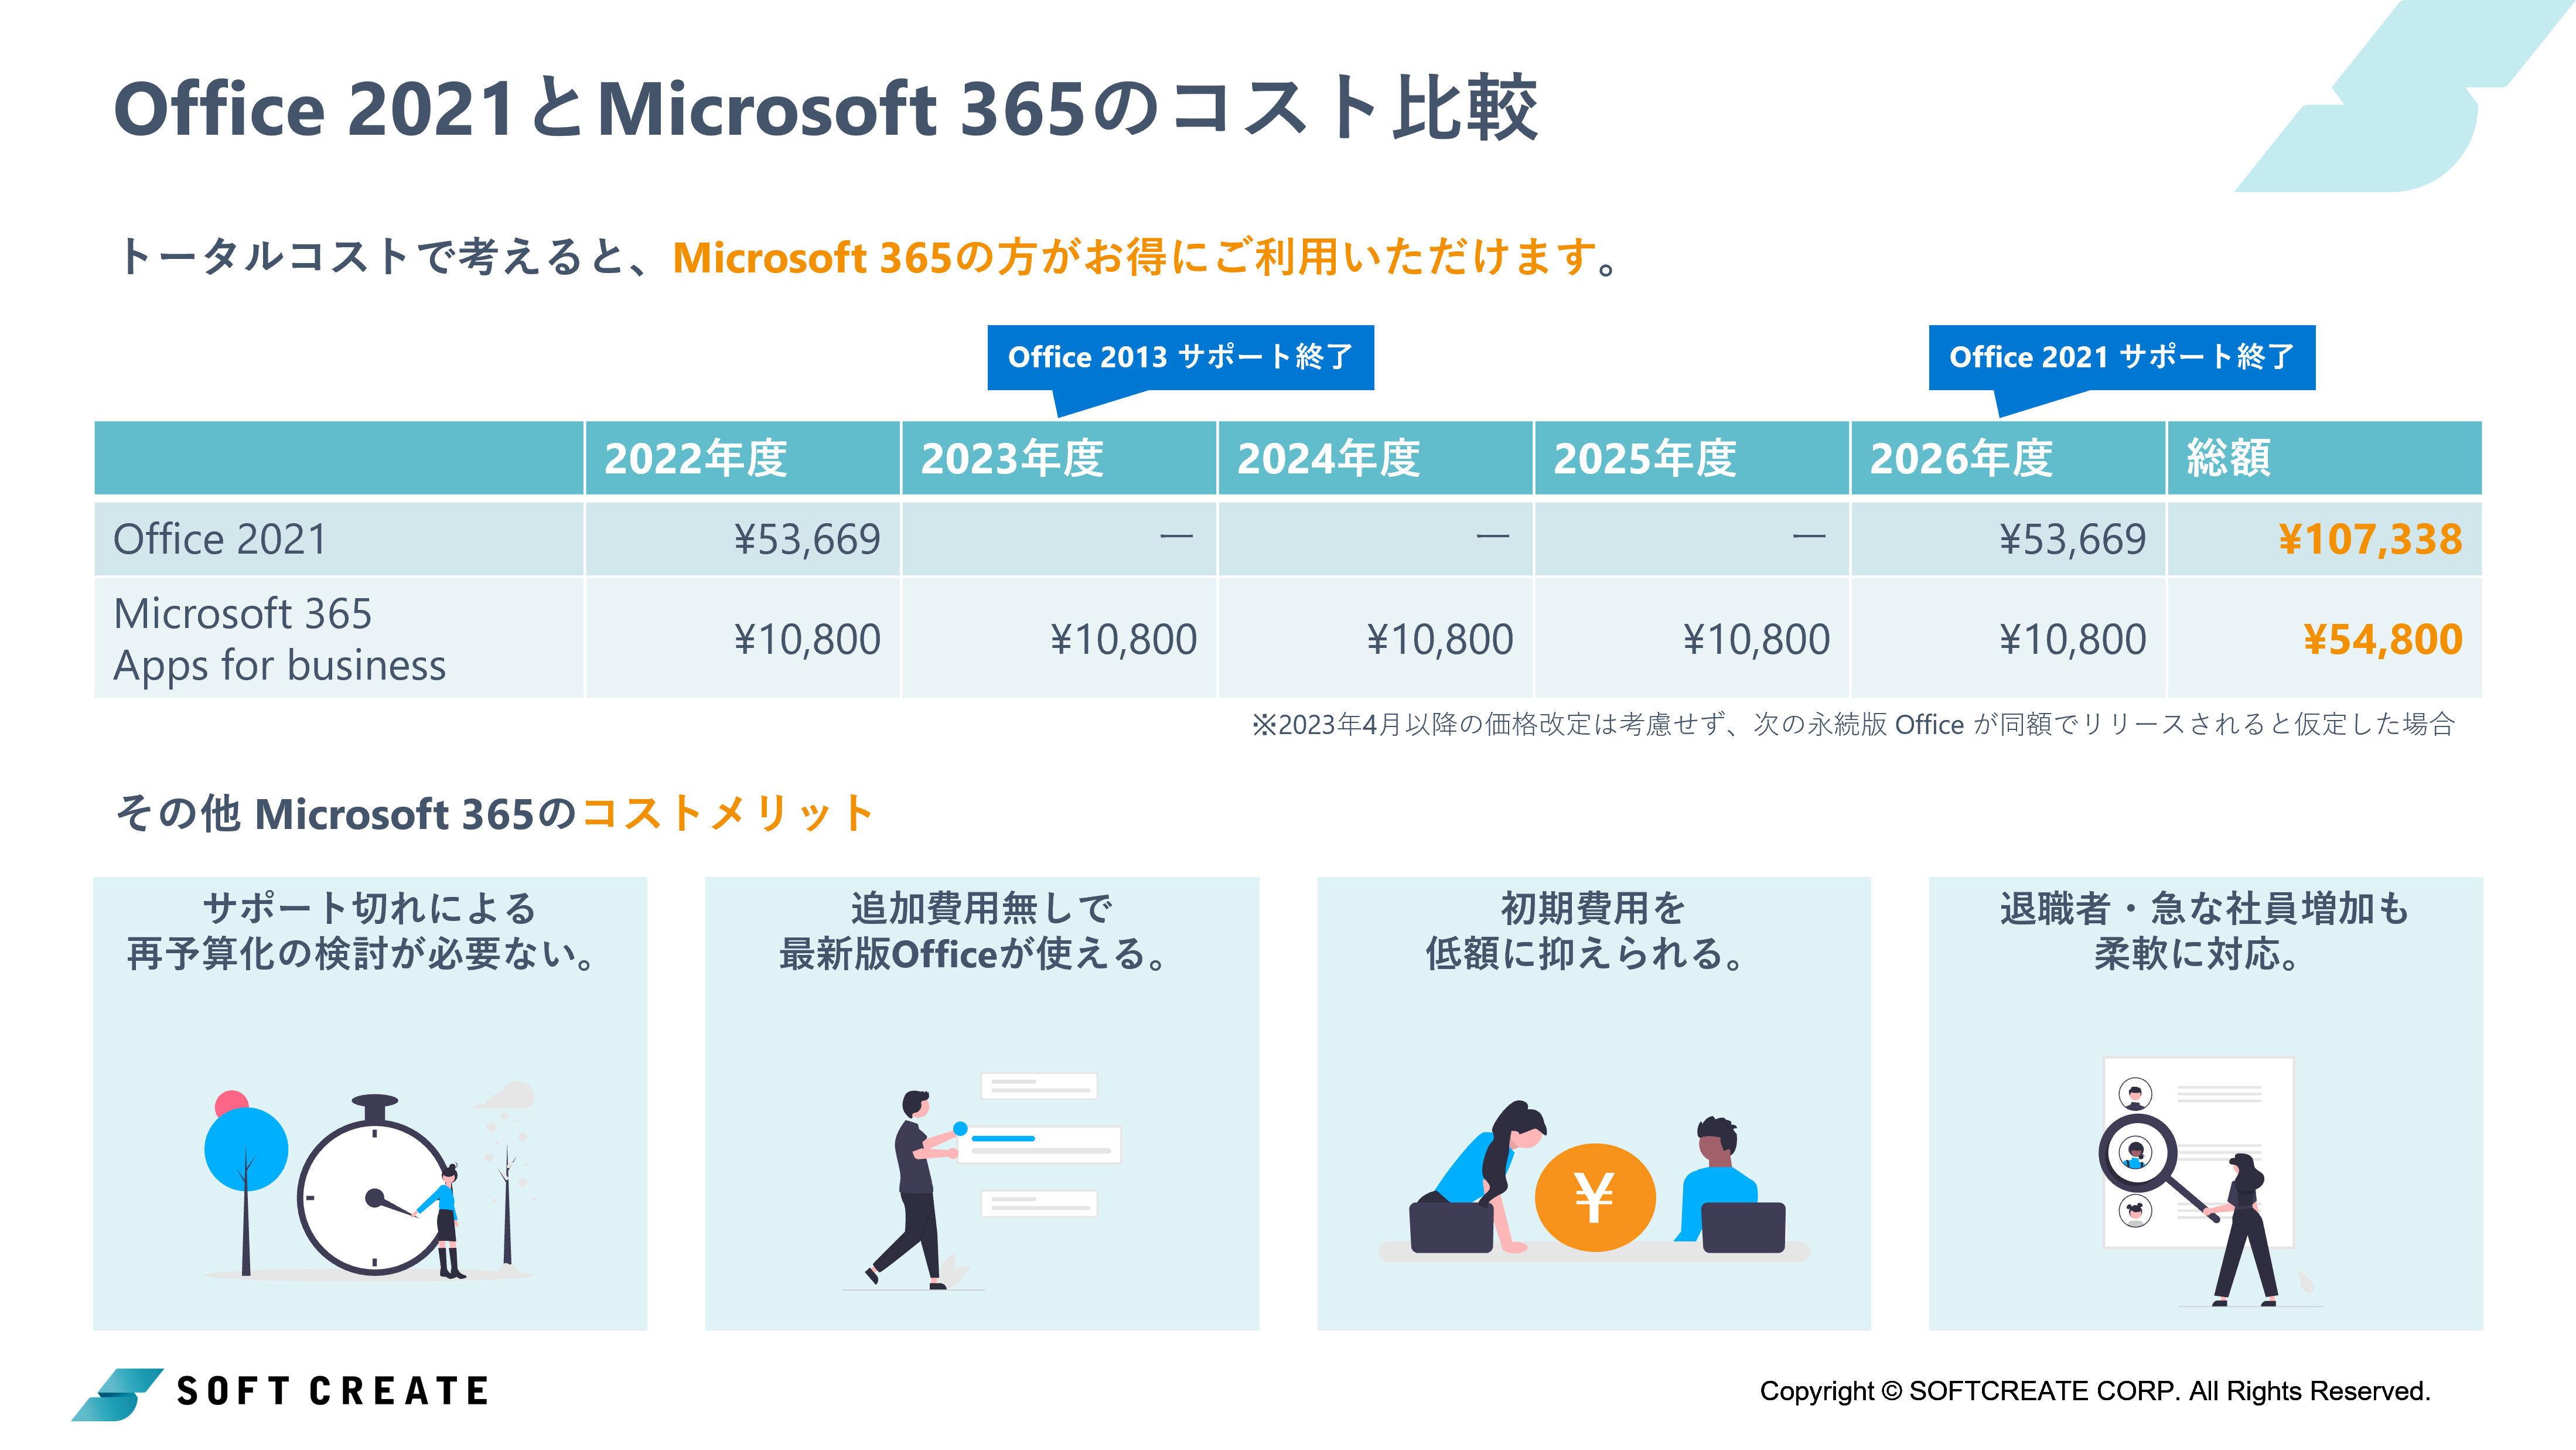 Microsoft 365への移行のポイント